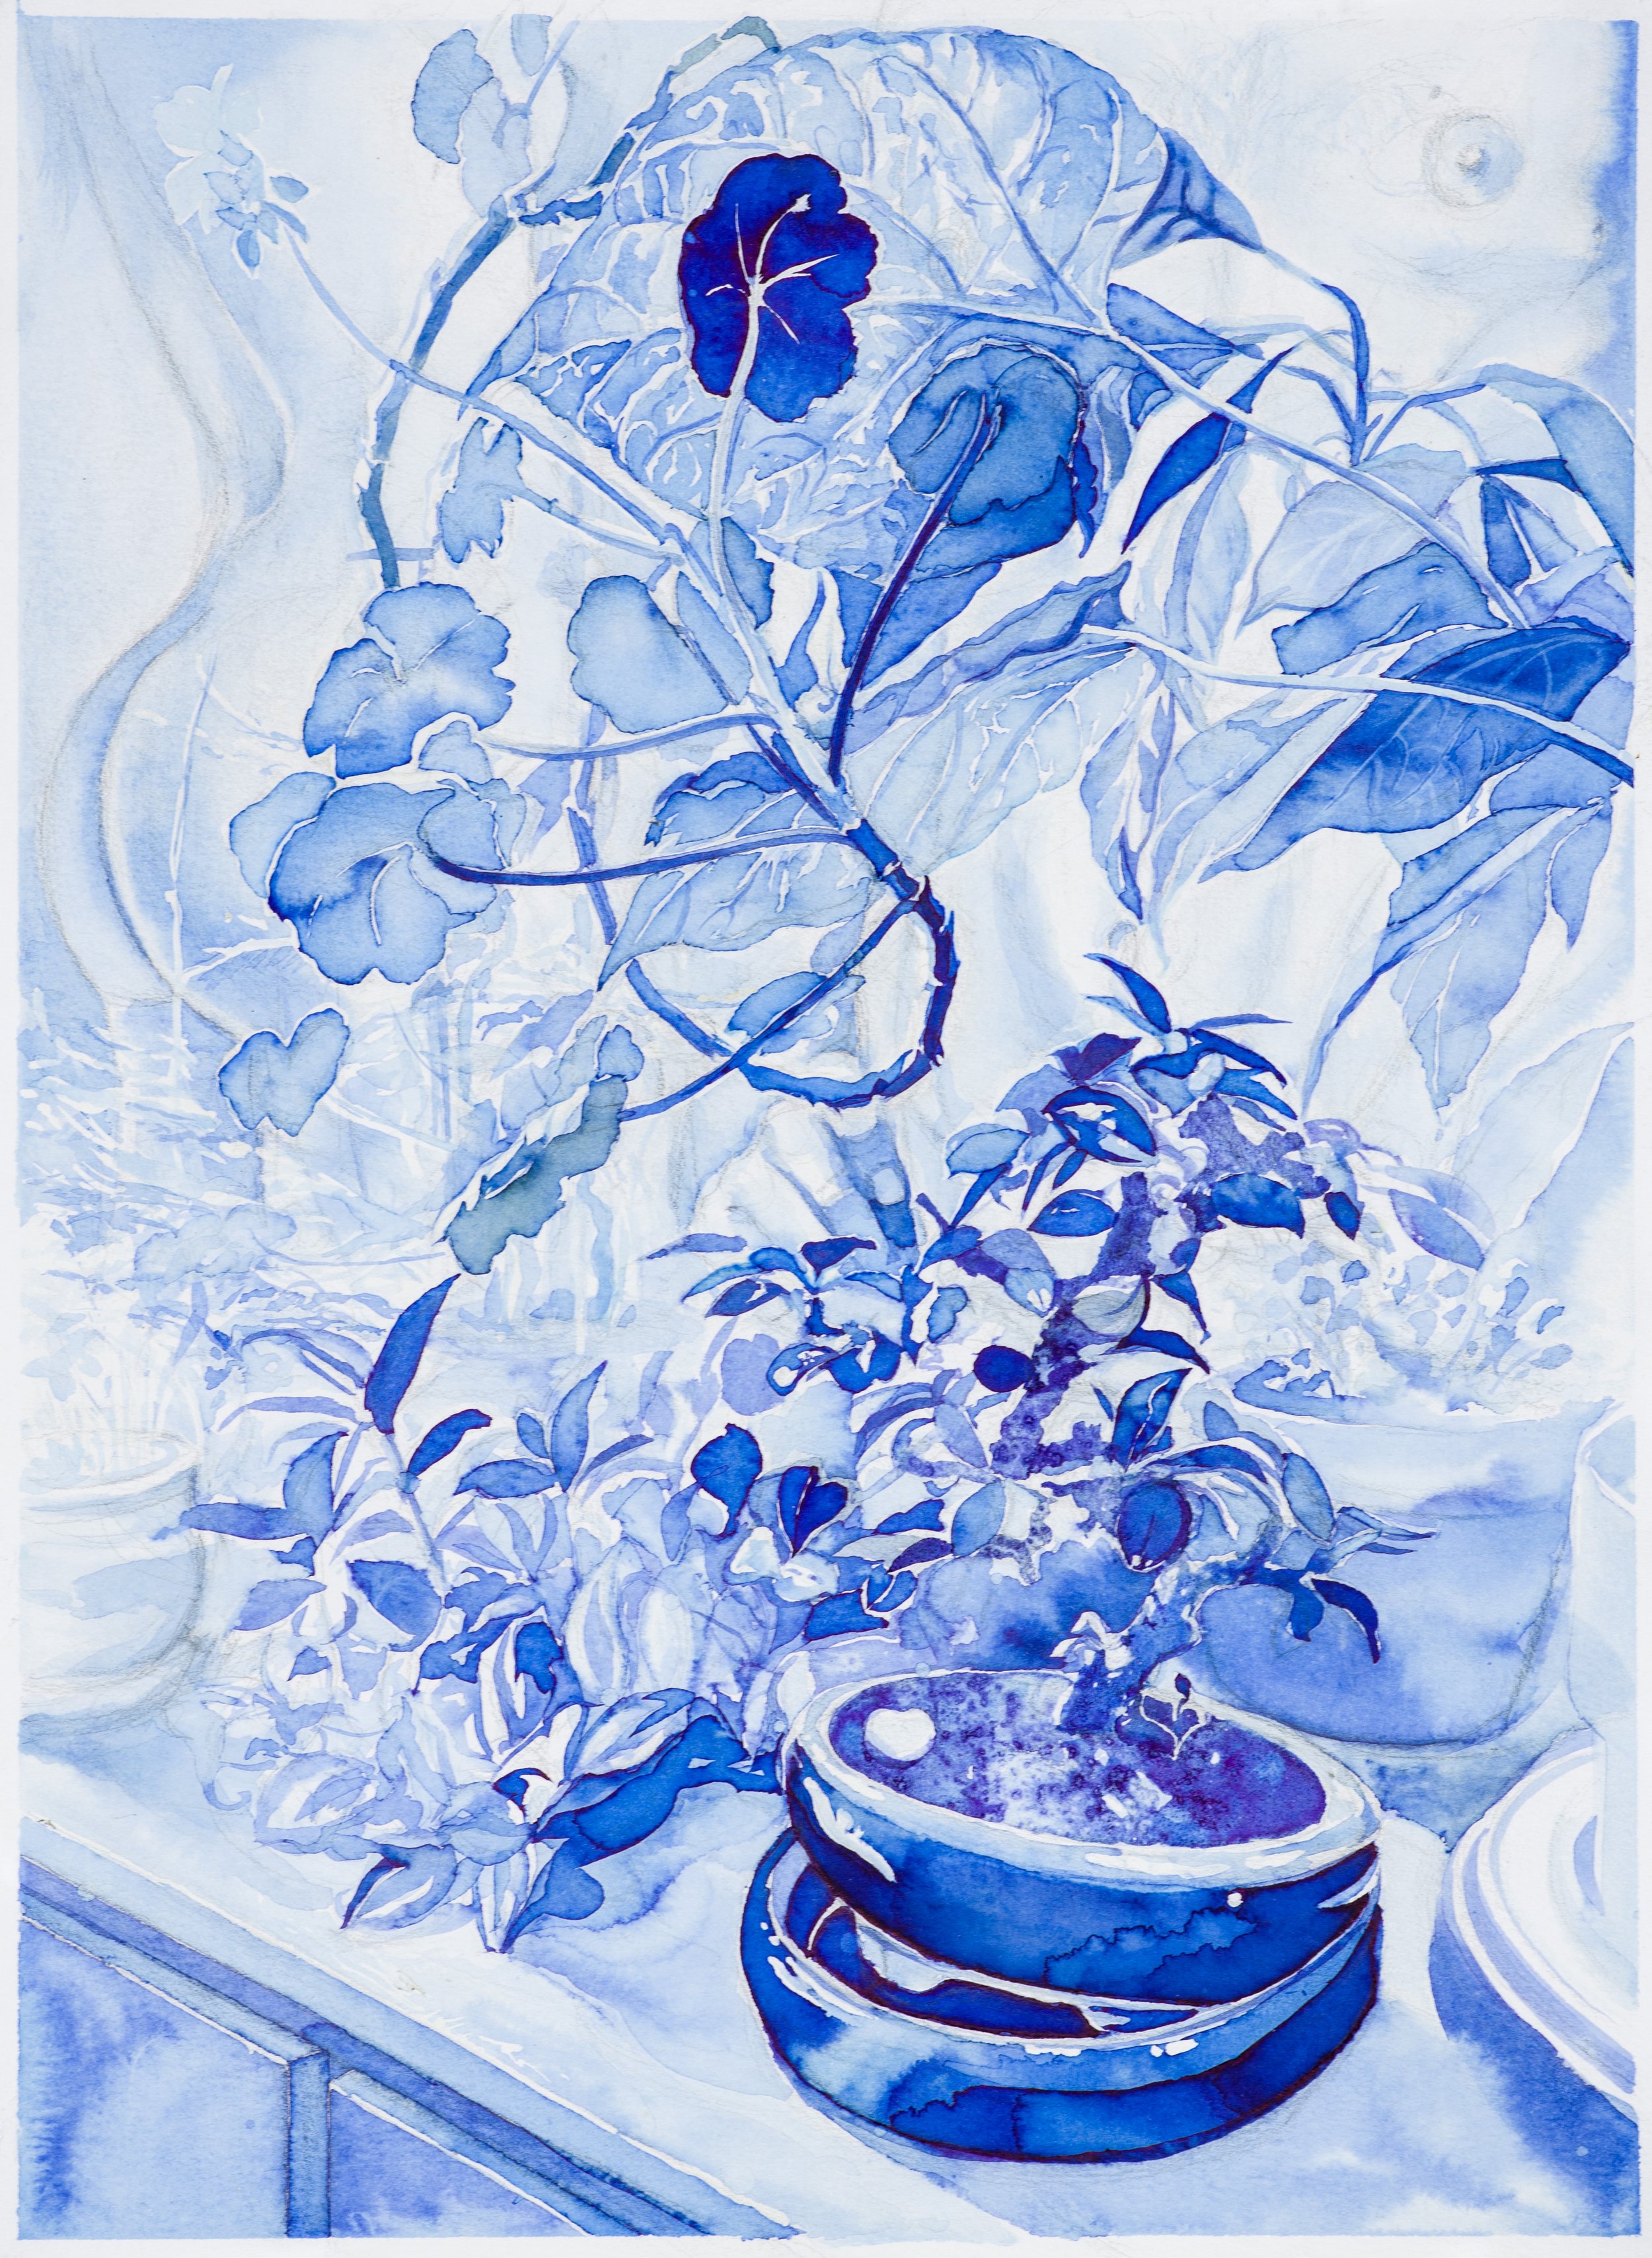 Podwoiski_Untitled (How to Make a Bonsai Blue)_2020_ink on paper.jpg